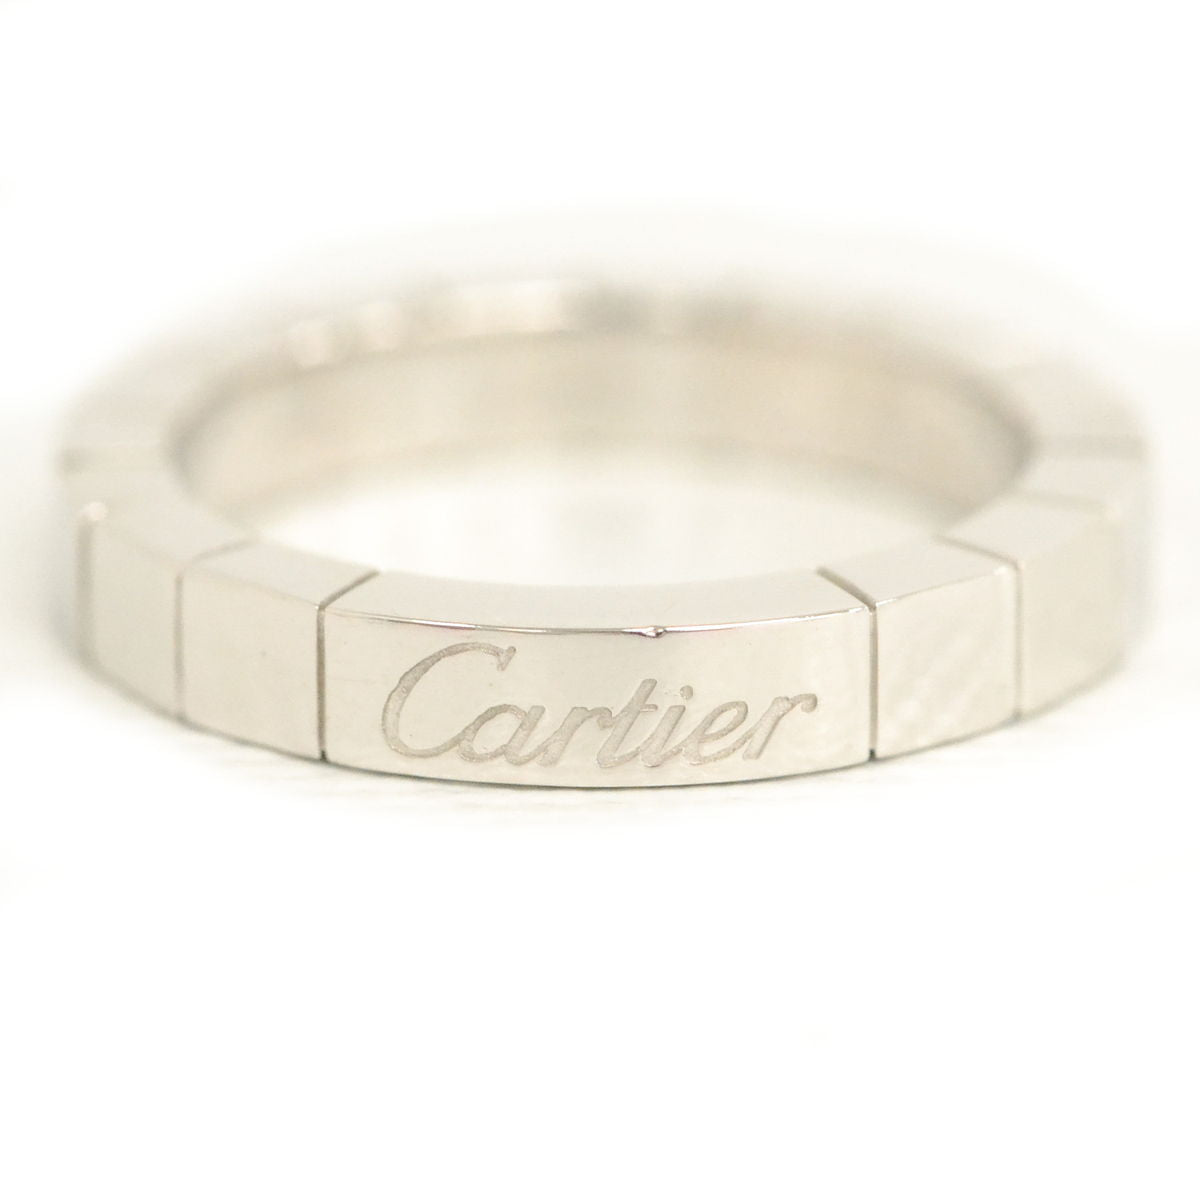 Cartier ラニエール 750 WG リング 指輪 45 7号